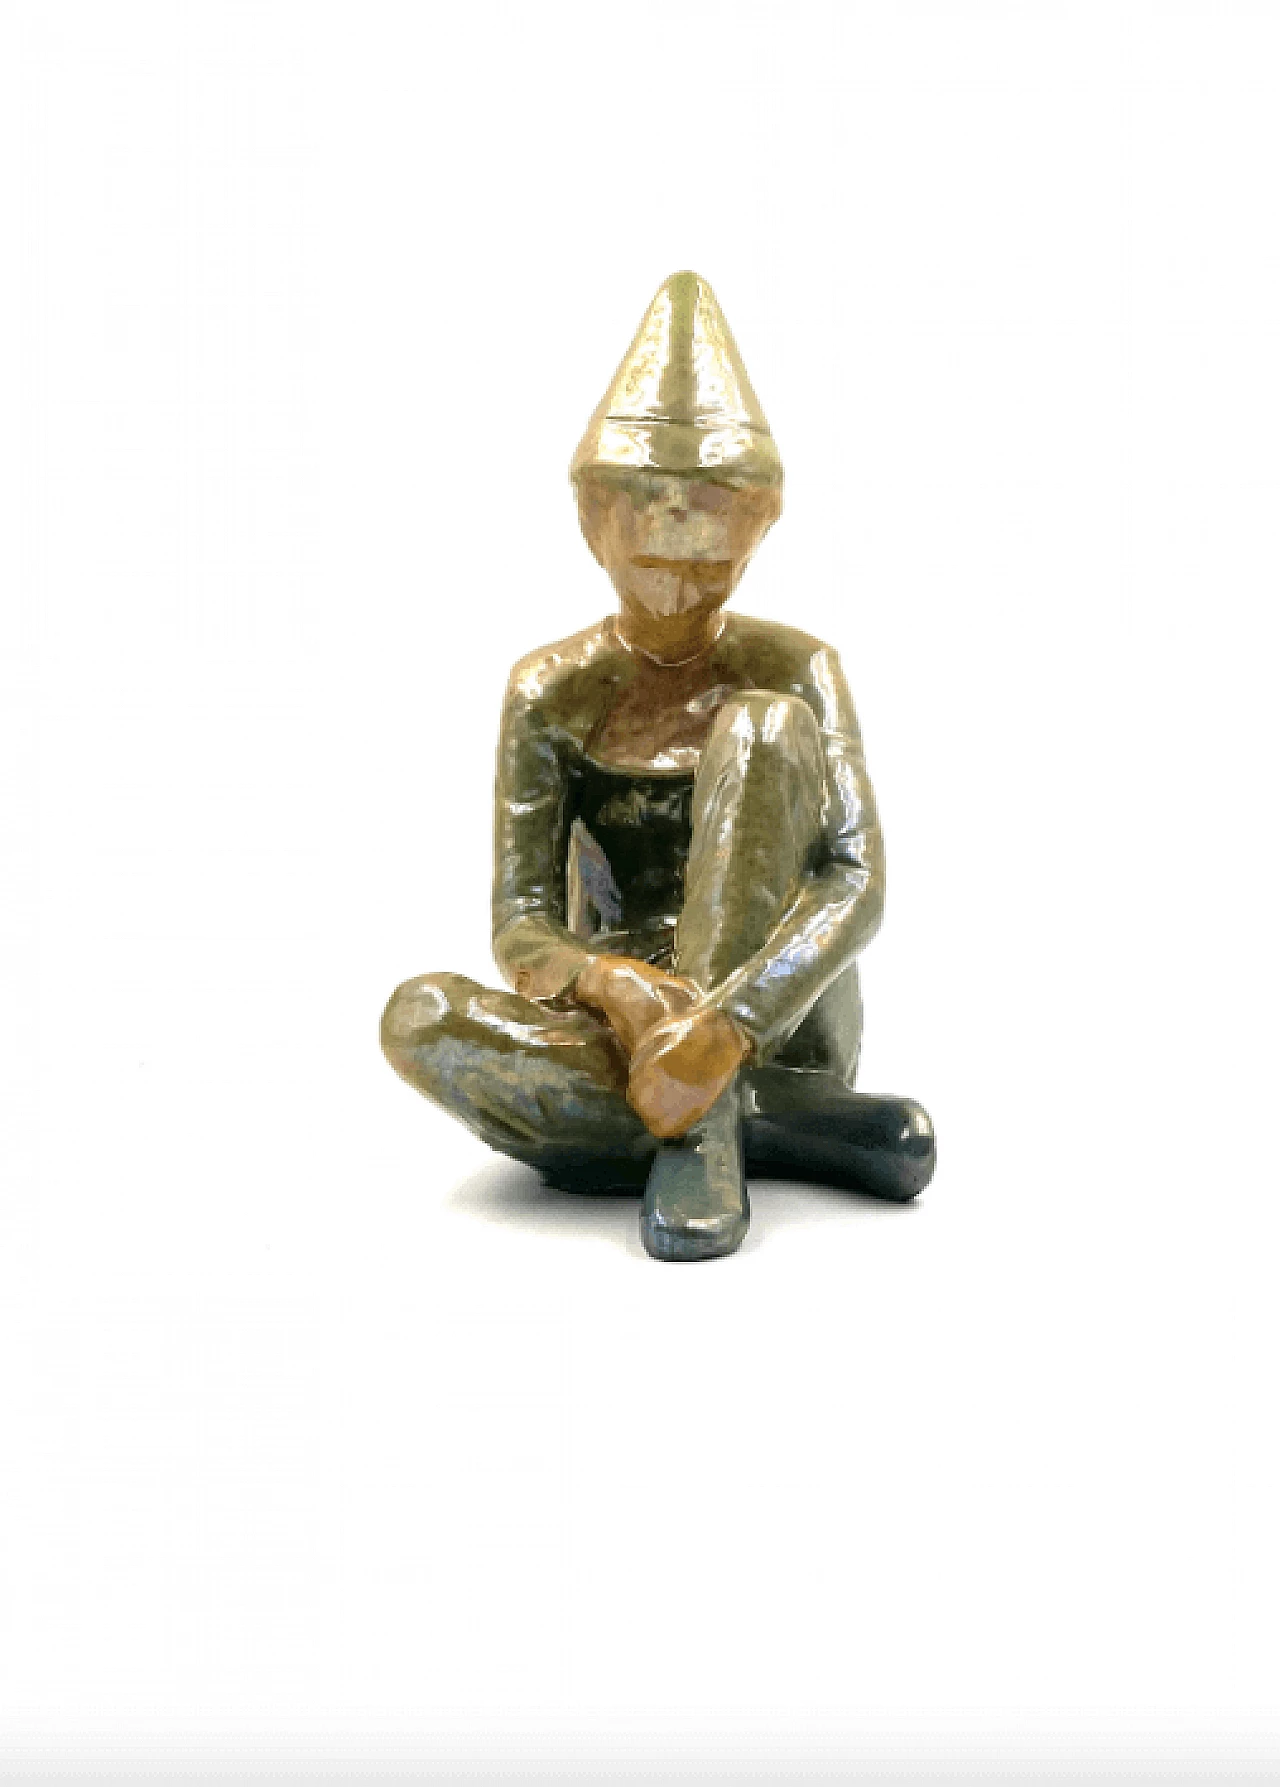 Giordano Tronconi, Seated boy, green ceramic figure from Faenza, 1950s 56